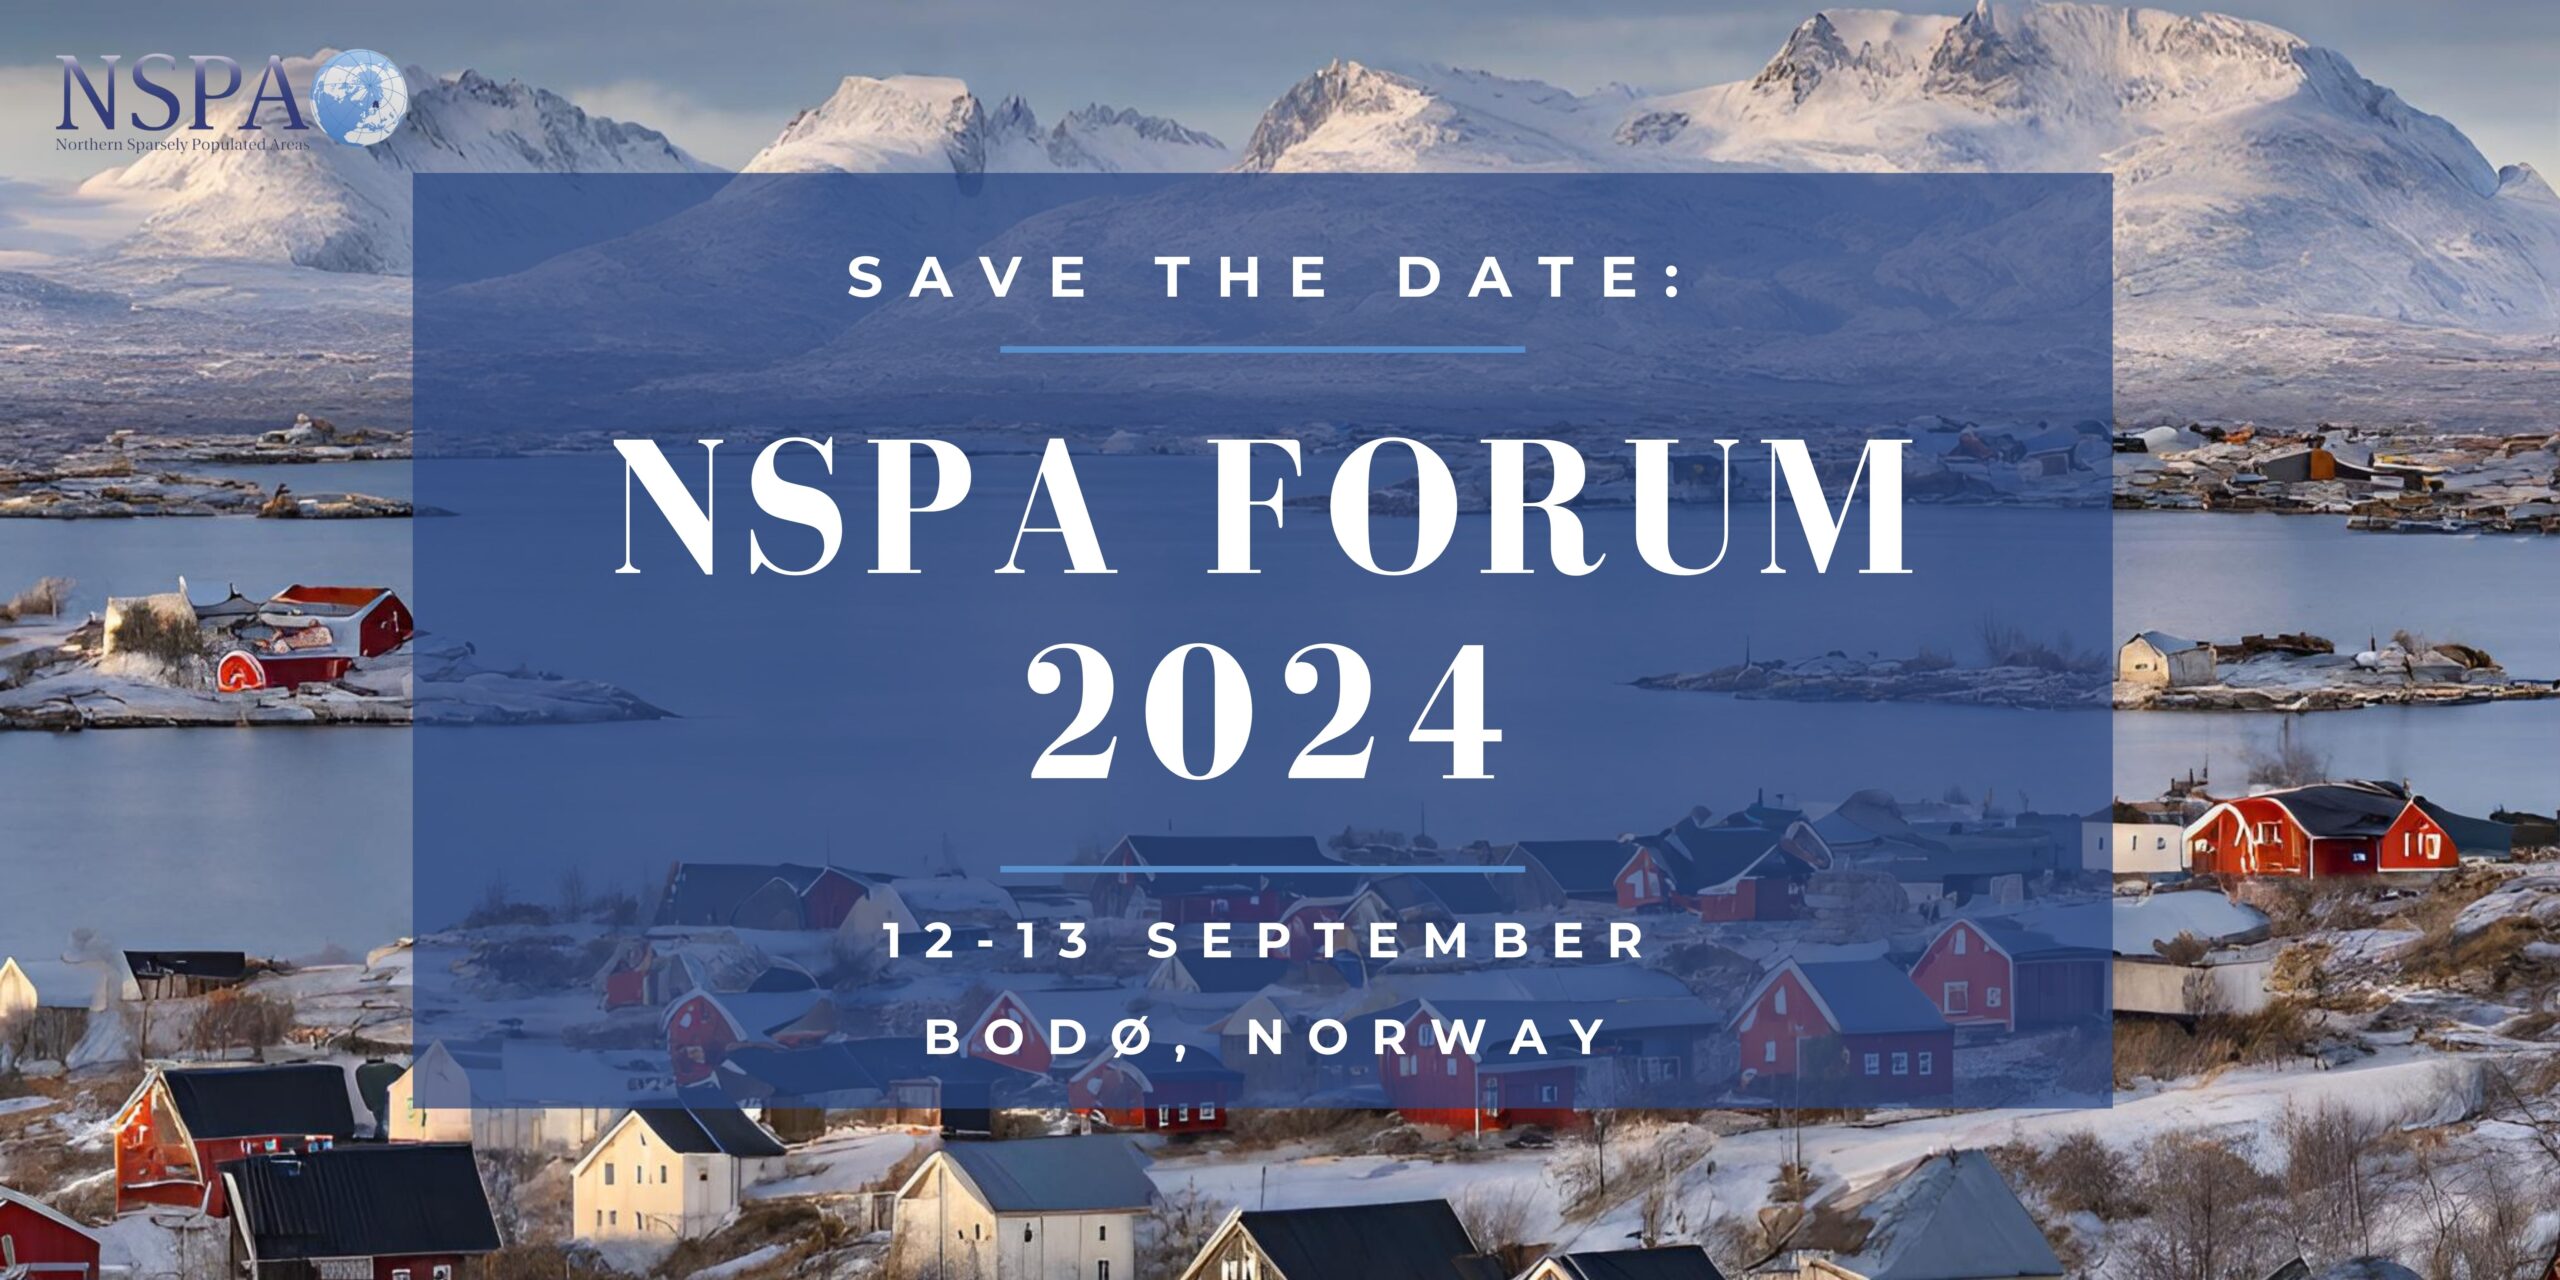 Save the date! NSPA Forum 2024 in Bodø